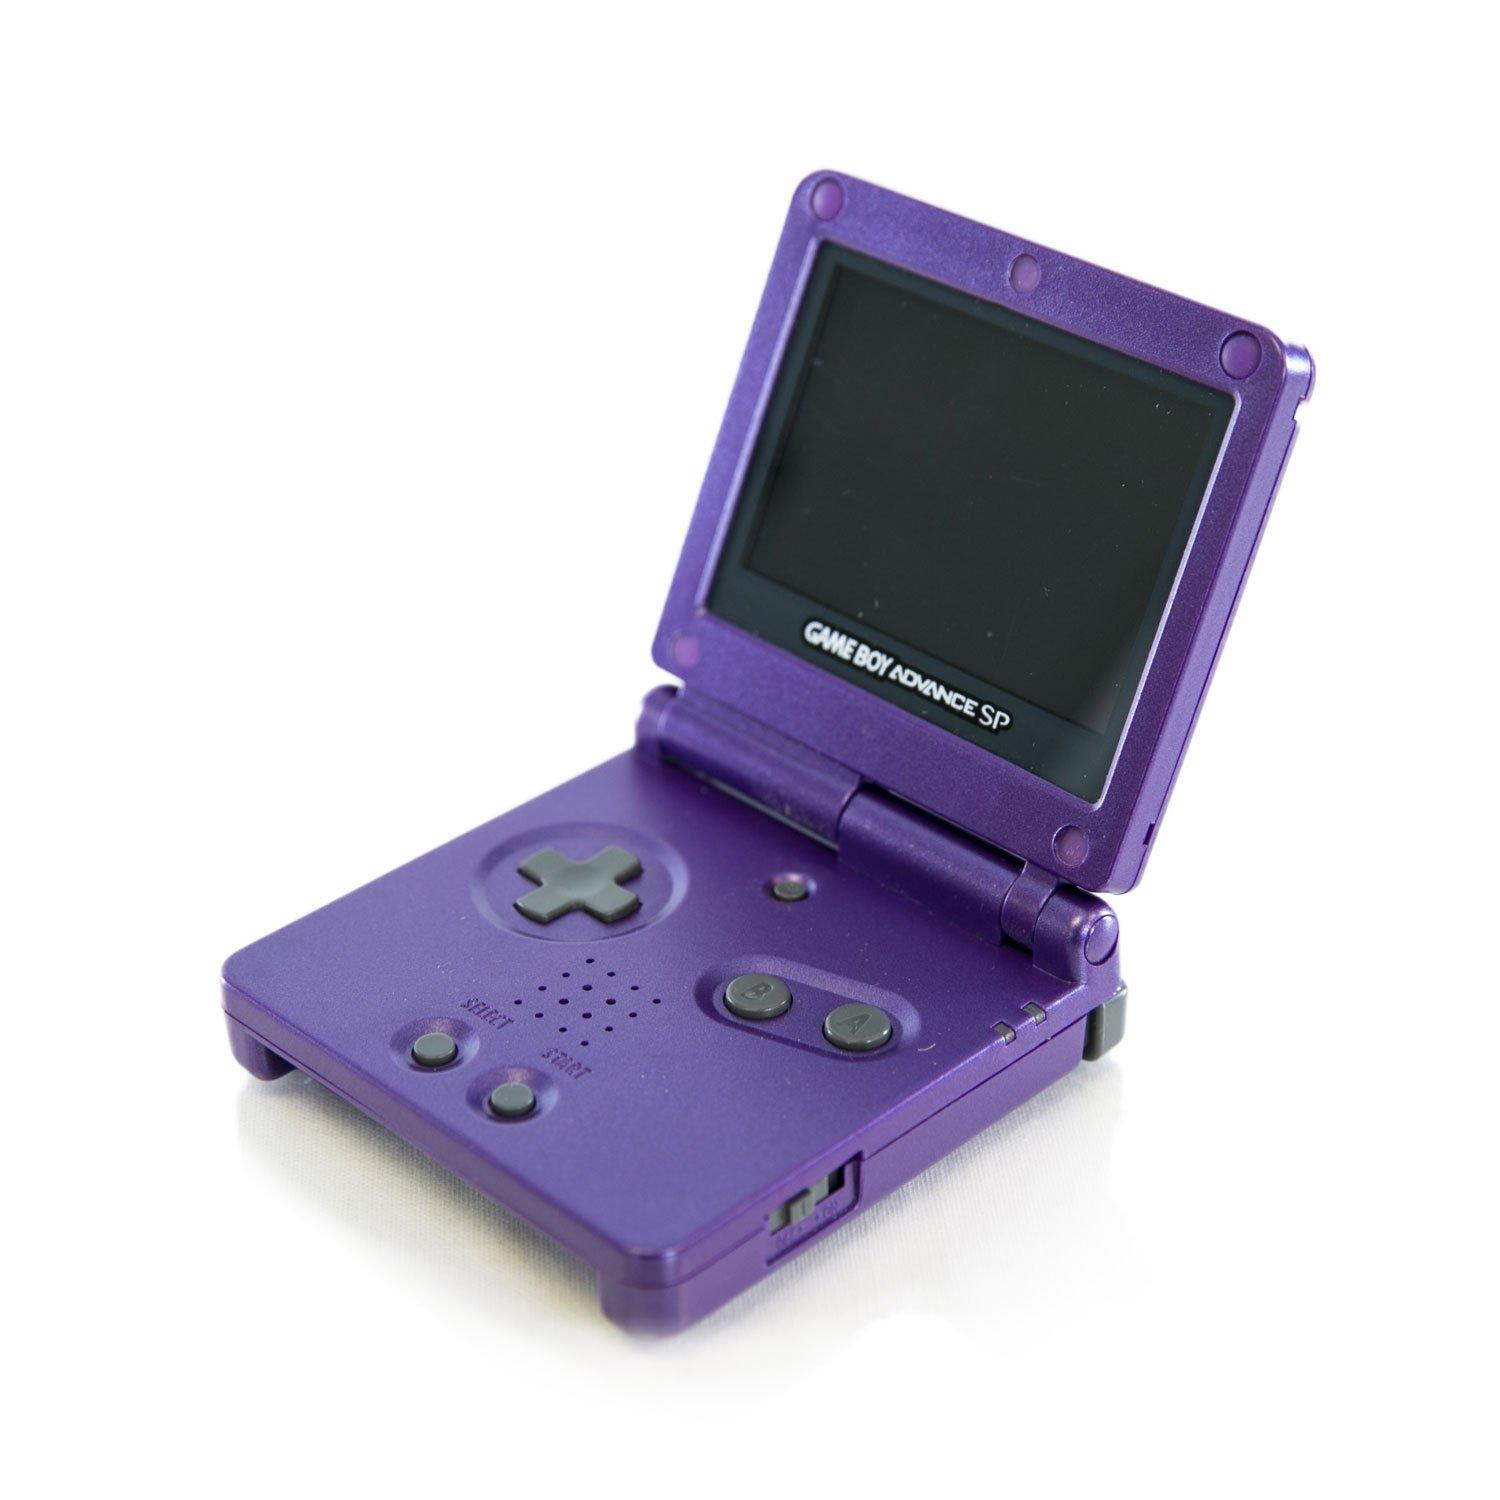 https://media.gamestop.com/i/gamestop/10160740/Nintendo-Game-Boy-Advance-SP-with-AC